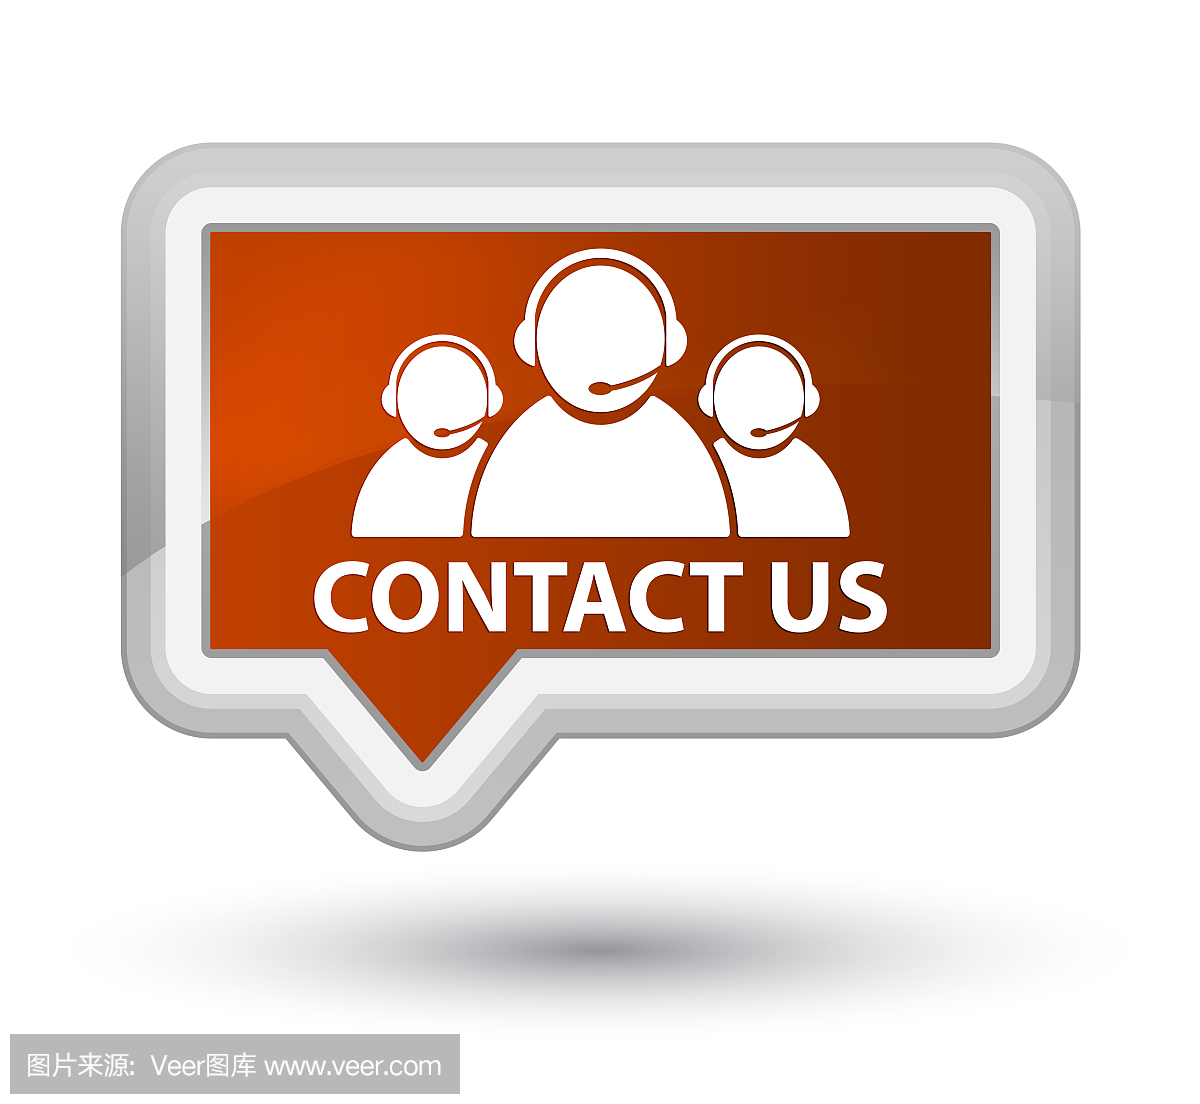 Contact us (customer care team icon) prime br